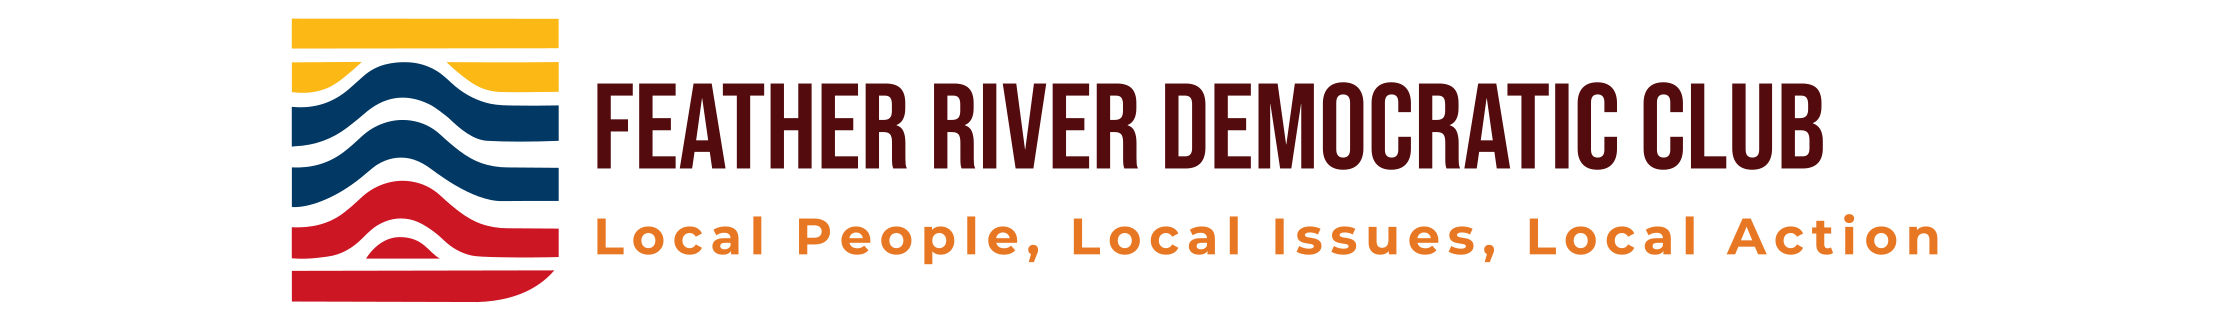 Feather River Democratic Club logo